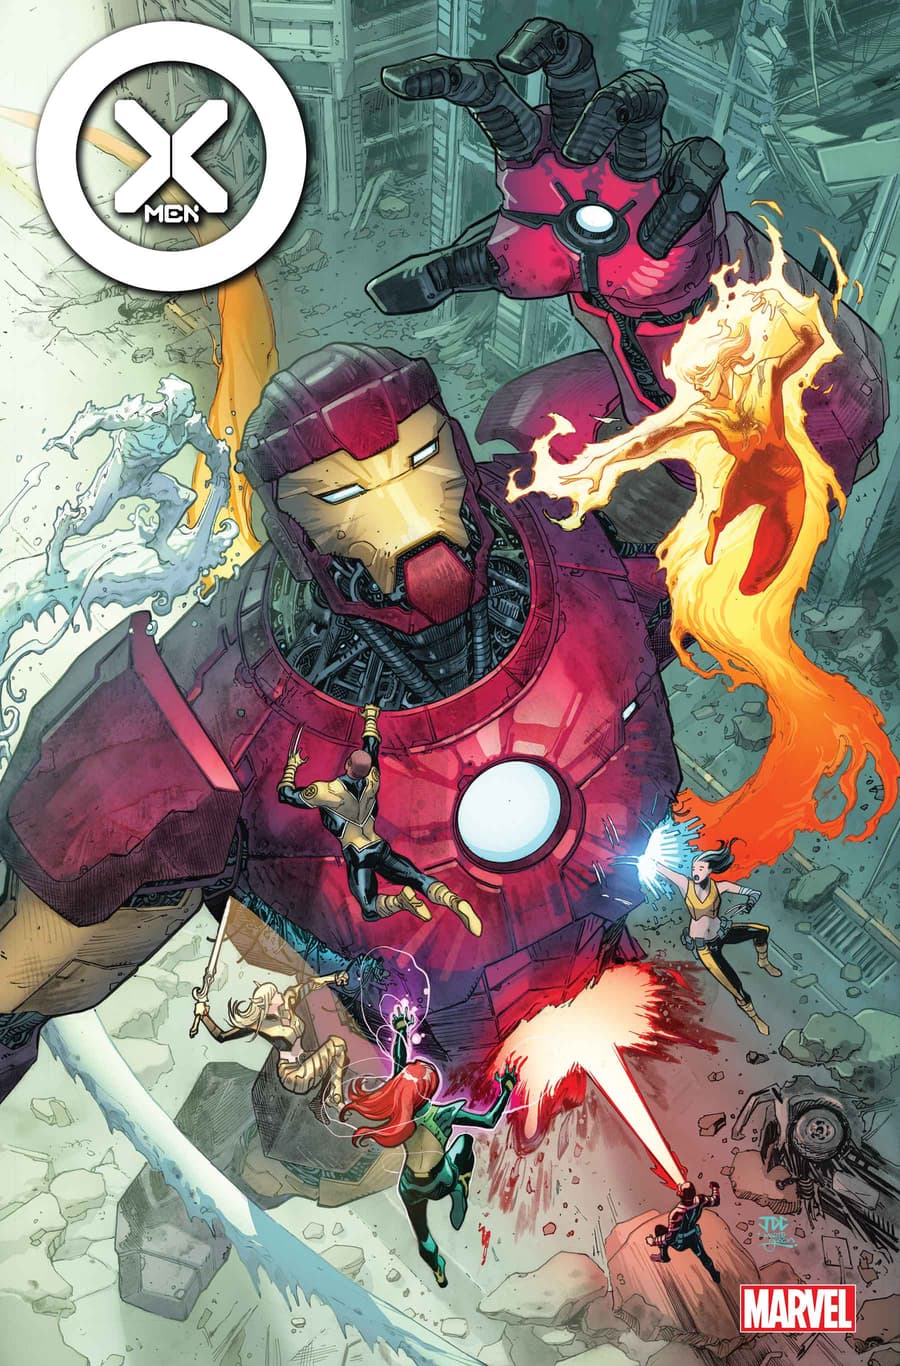 X-Men 23 cover by Joshua Cassara